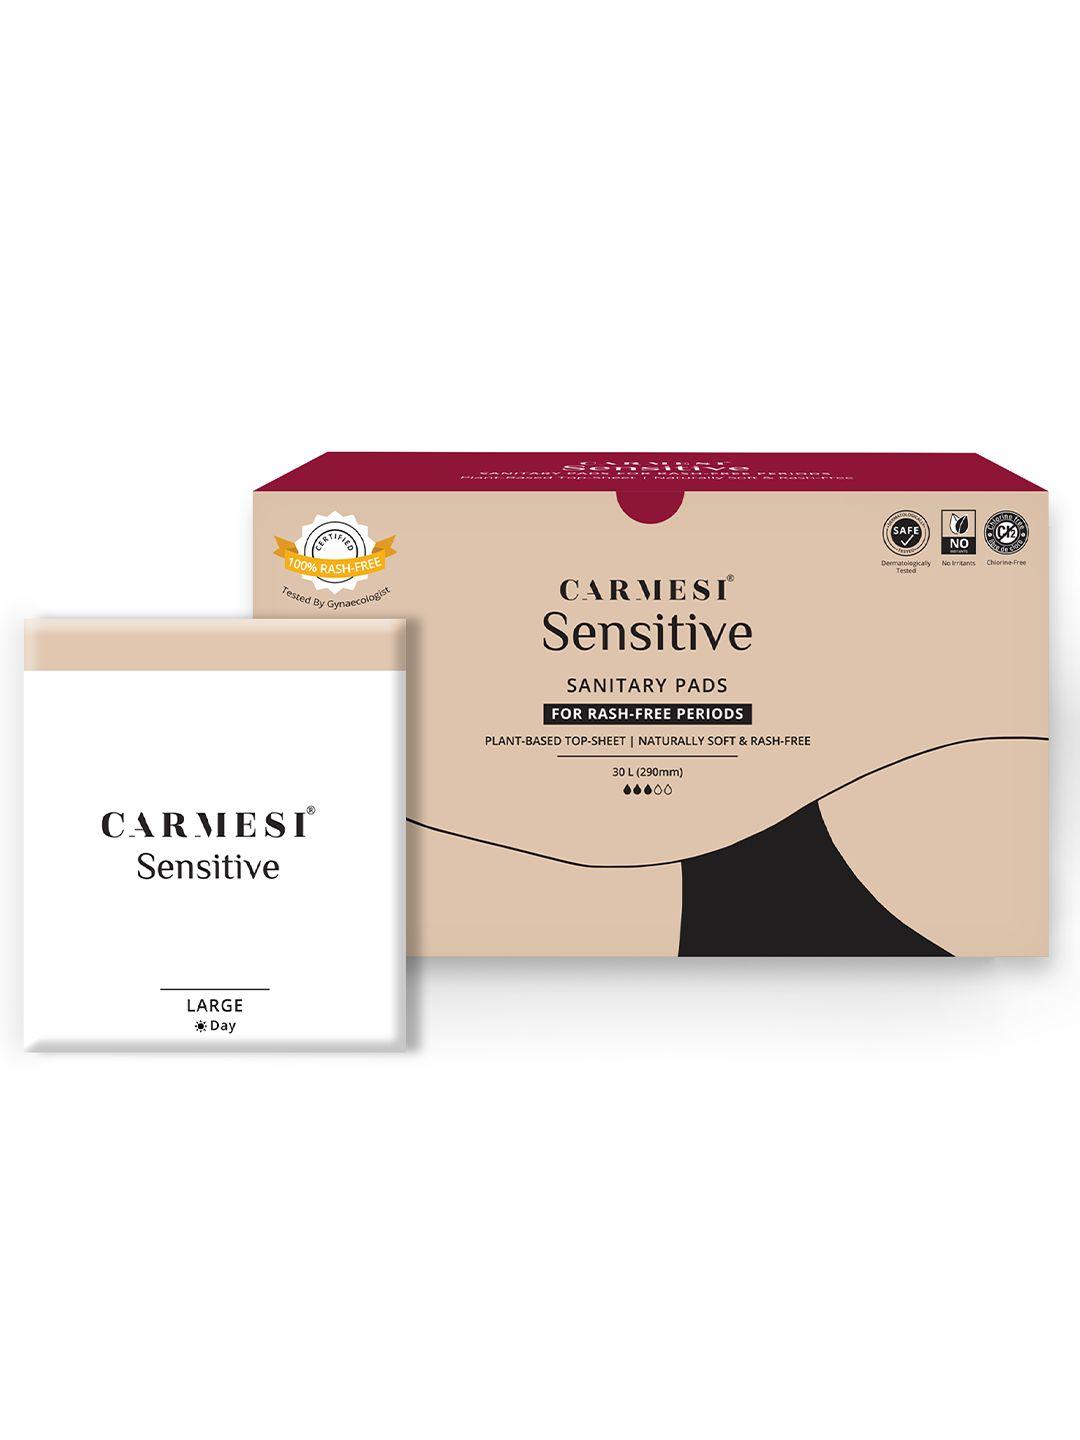 carmesi sencitive sanitary pad rash free naturally soft plant based top sheet 30 l pad